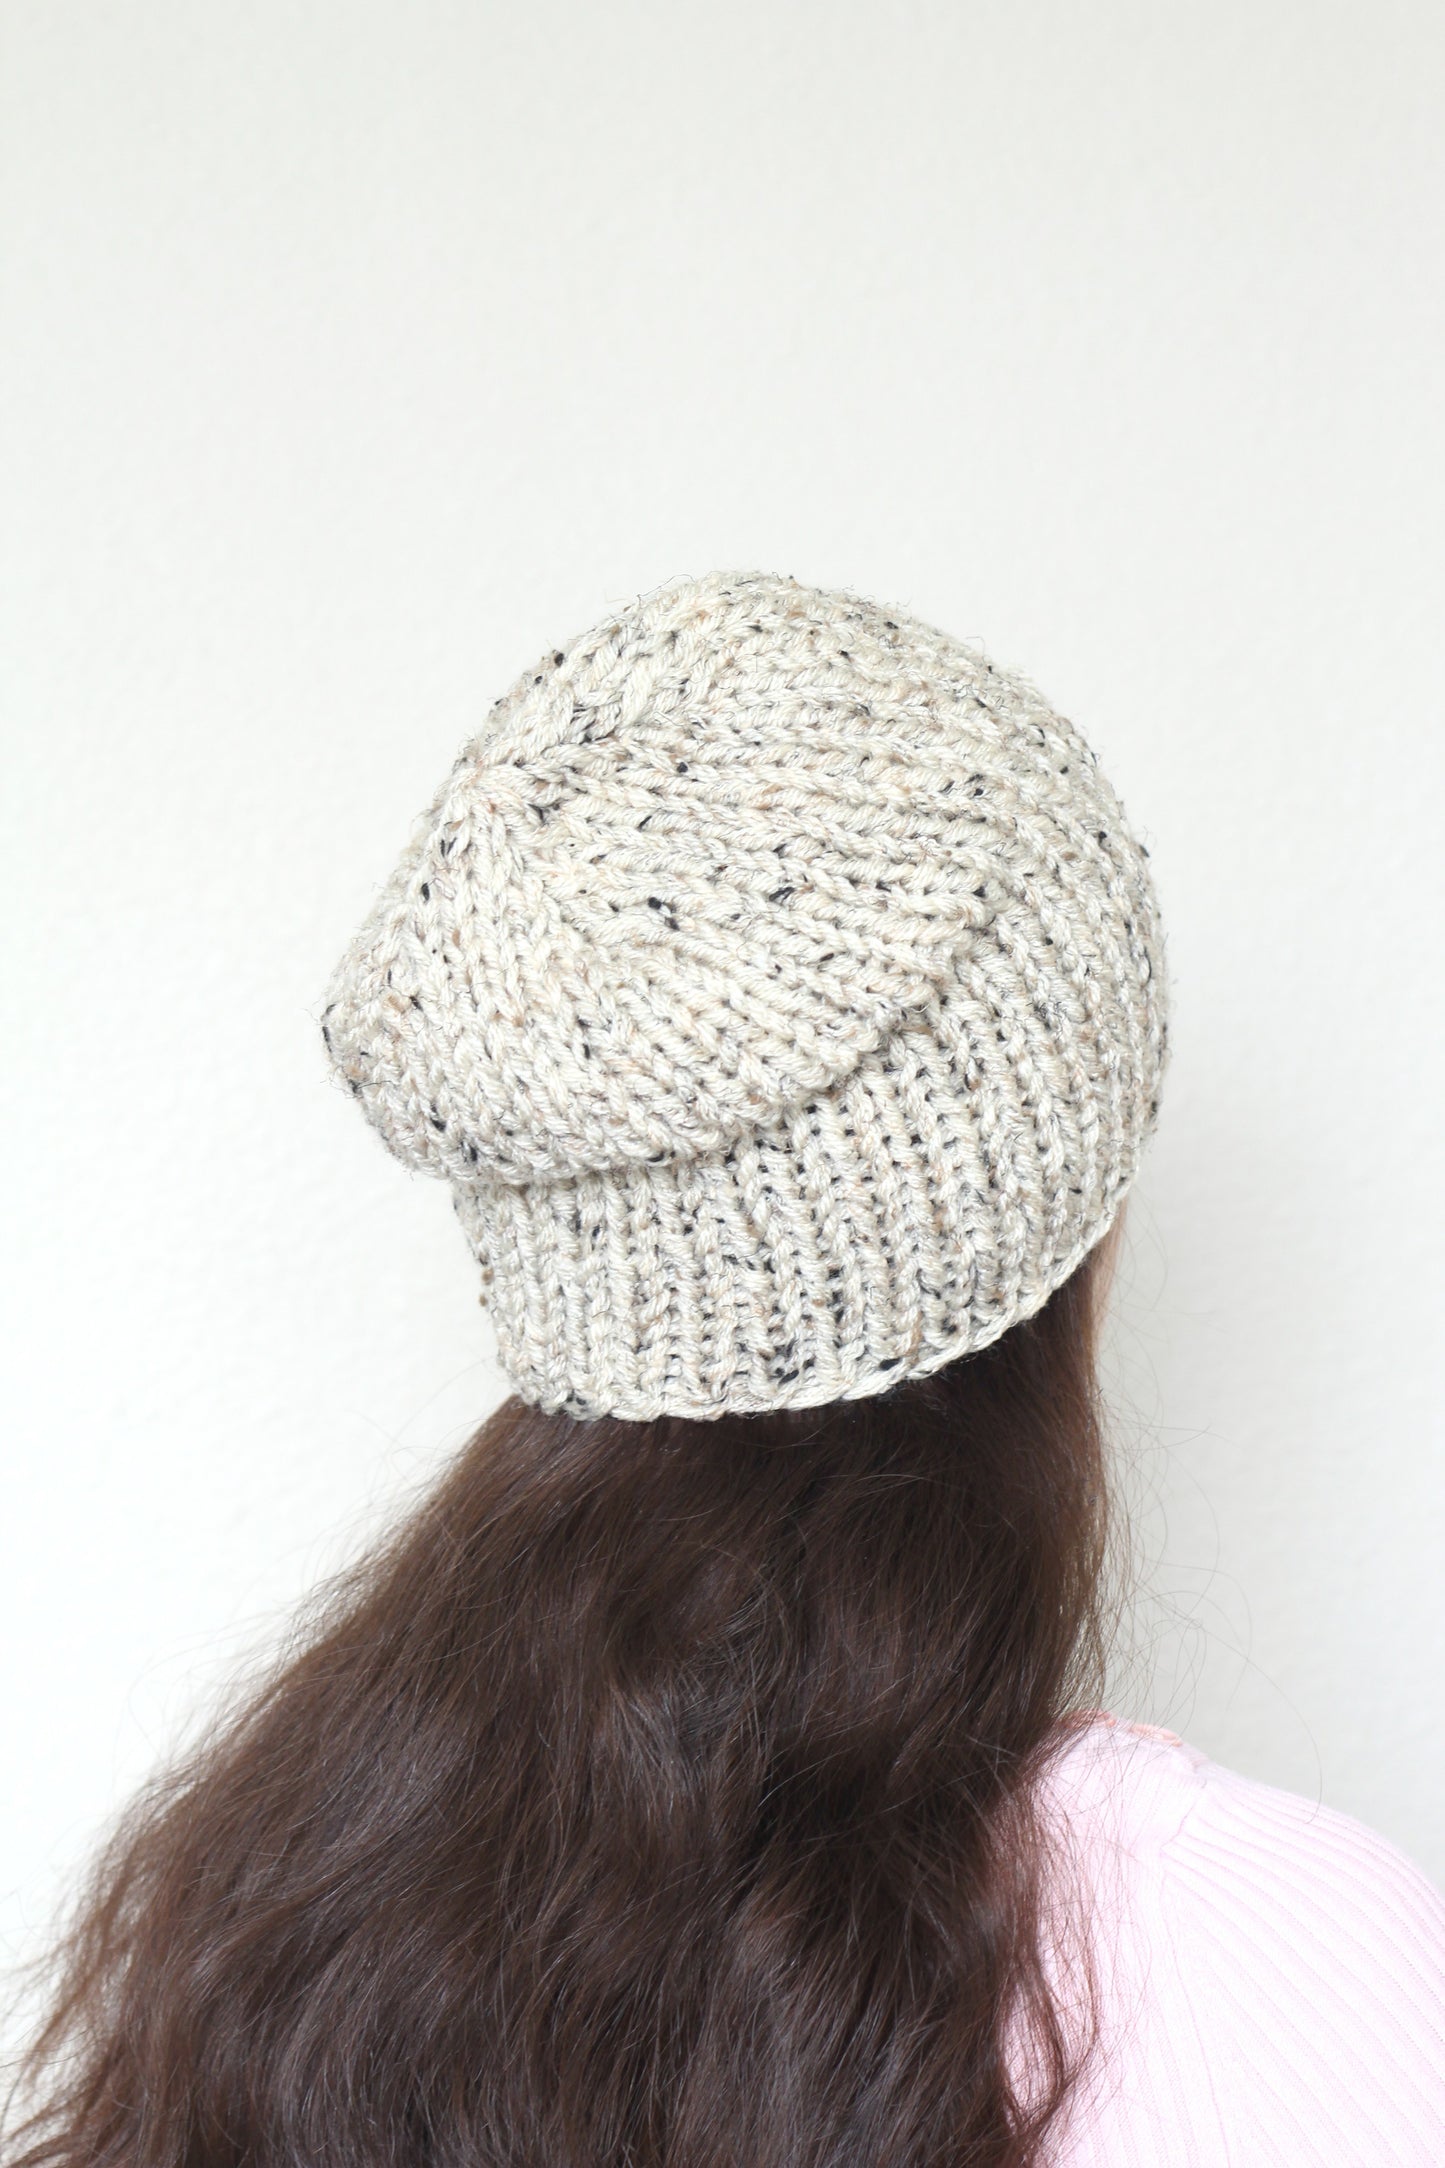 Beanie hat, knit hat, slouchy hat, knit beanie in dusty blue color